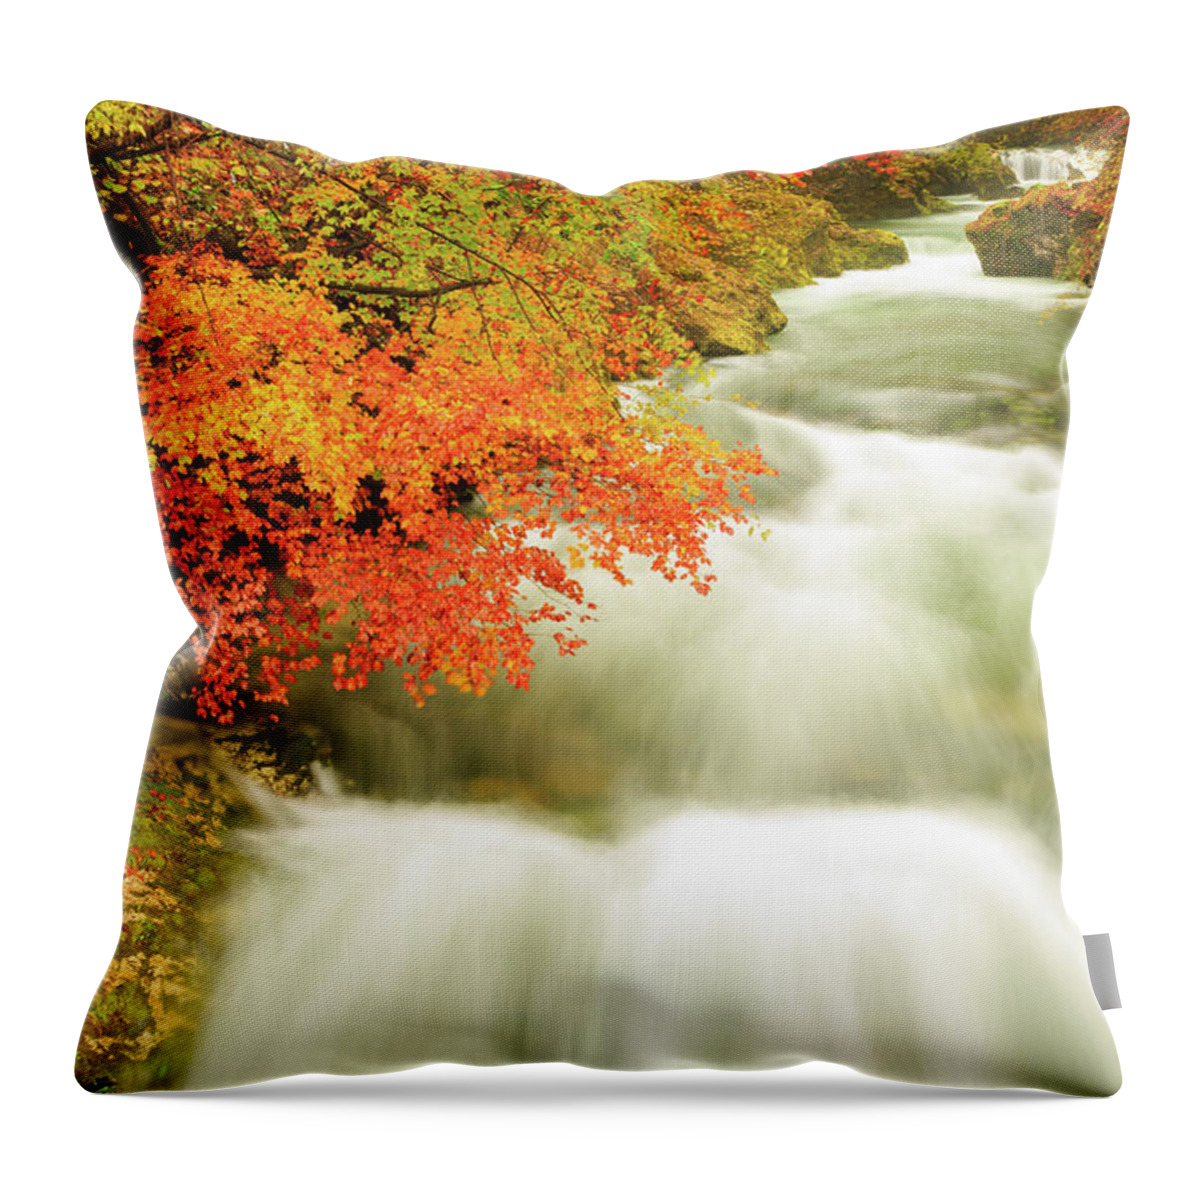 Soteska Throw Pillow featuring the photograph The Soteska Vintgar gorge in Autumn by Ian Middleton